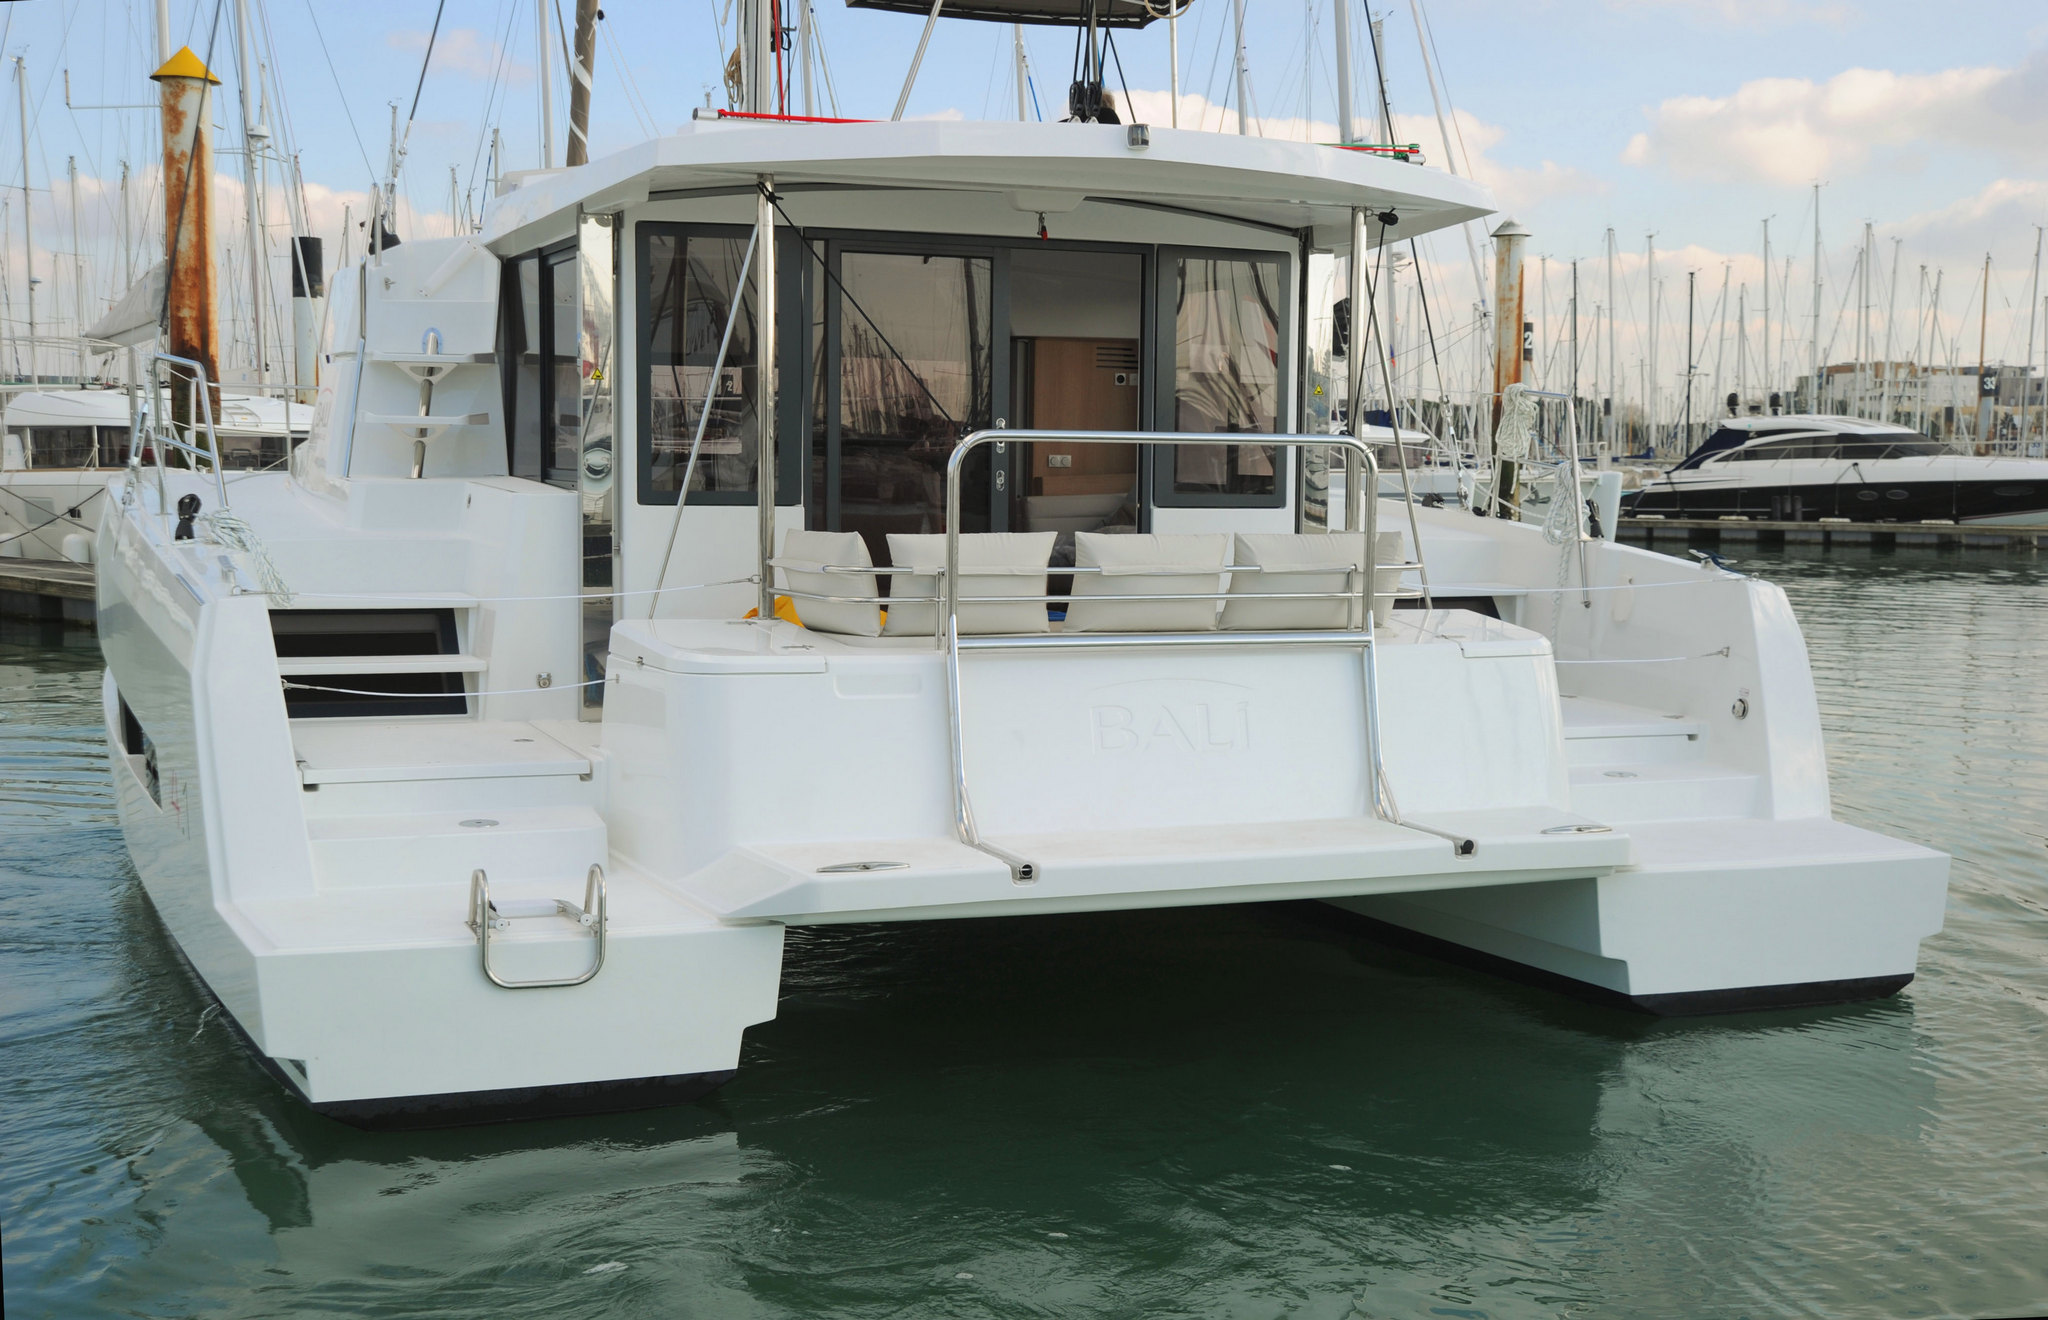 Catamaran FOR CHARTER, year 2018 brand Bali Catamaran and model 4.1, available in Puerto Rubicon Playa Blanca Lanzarote España